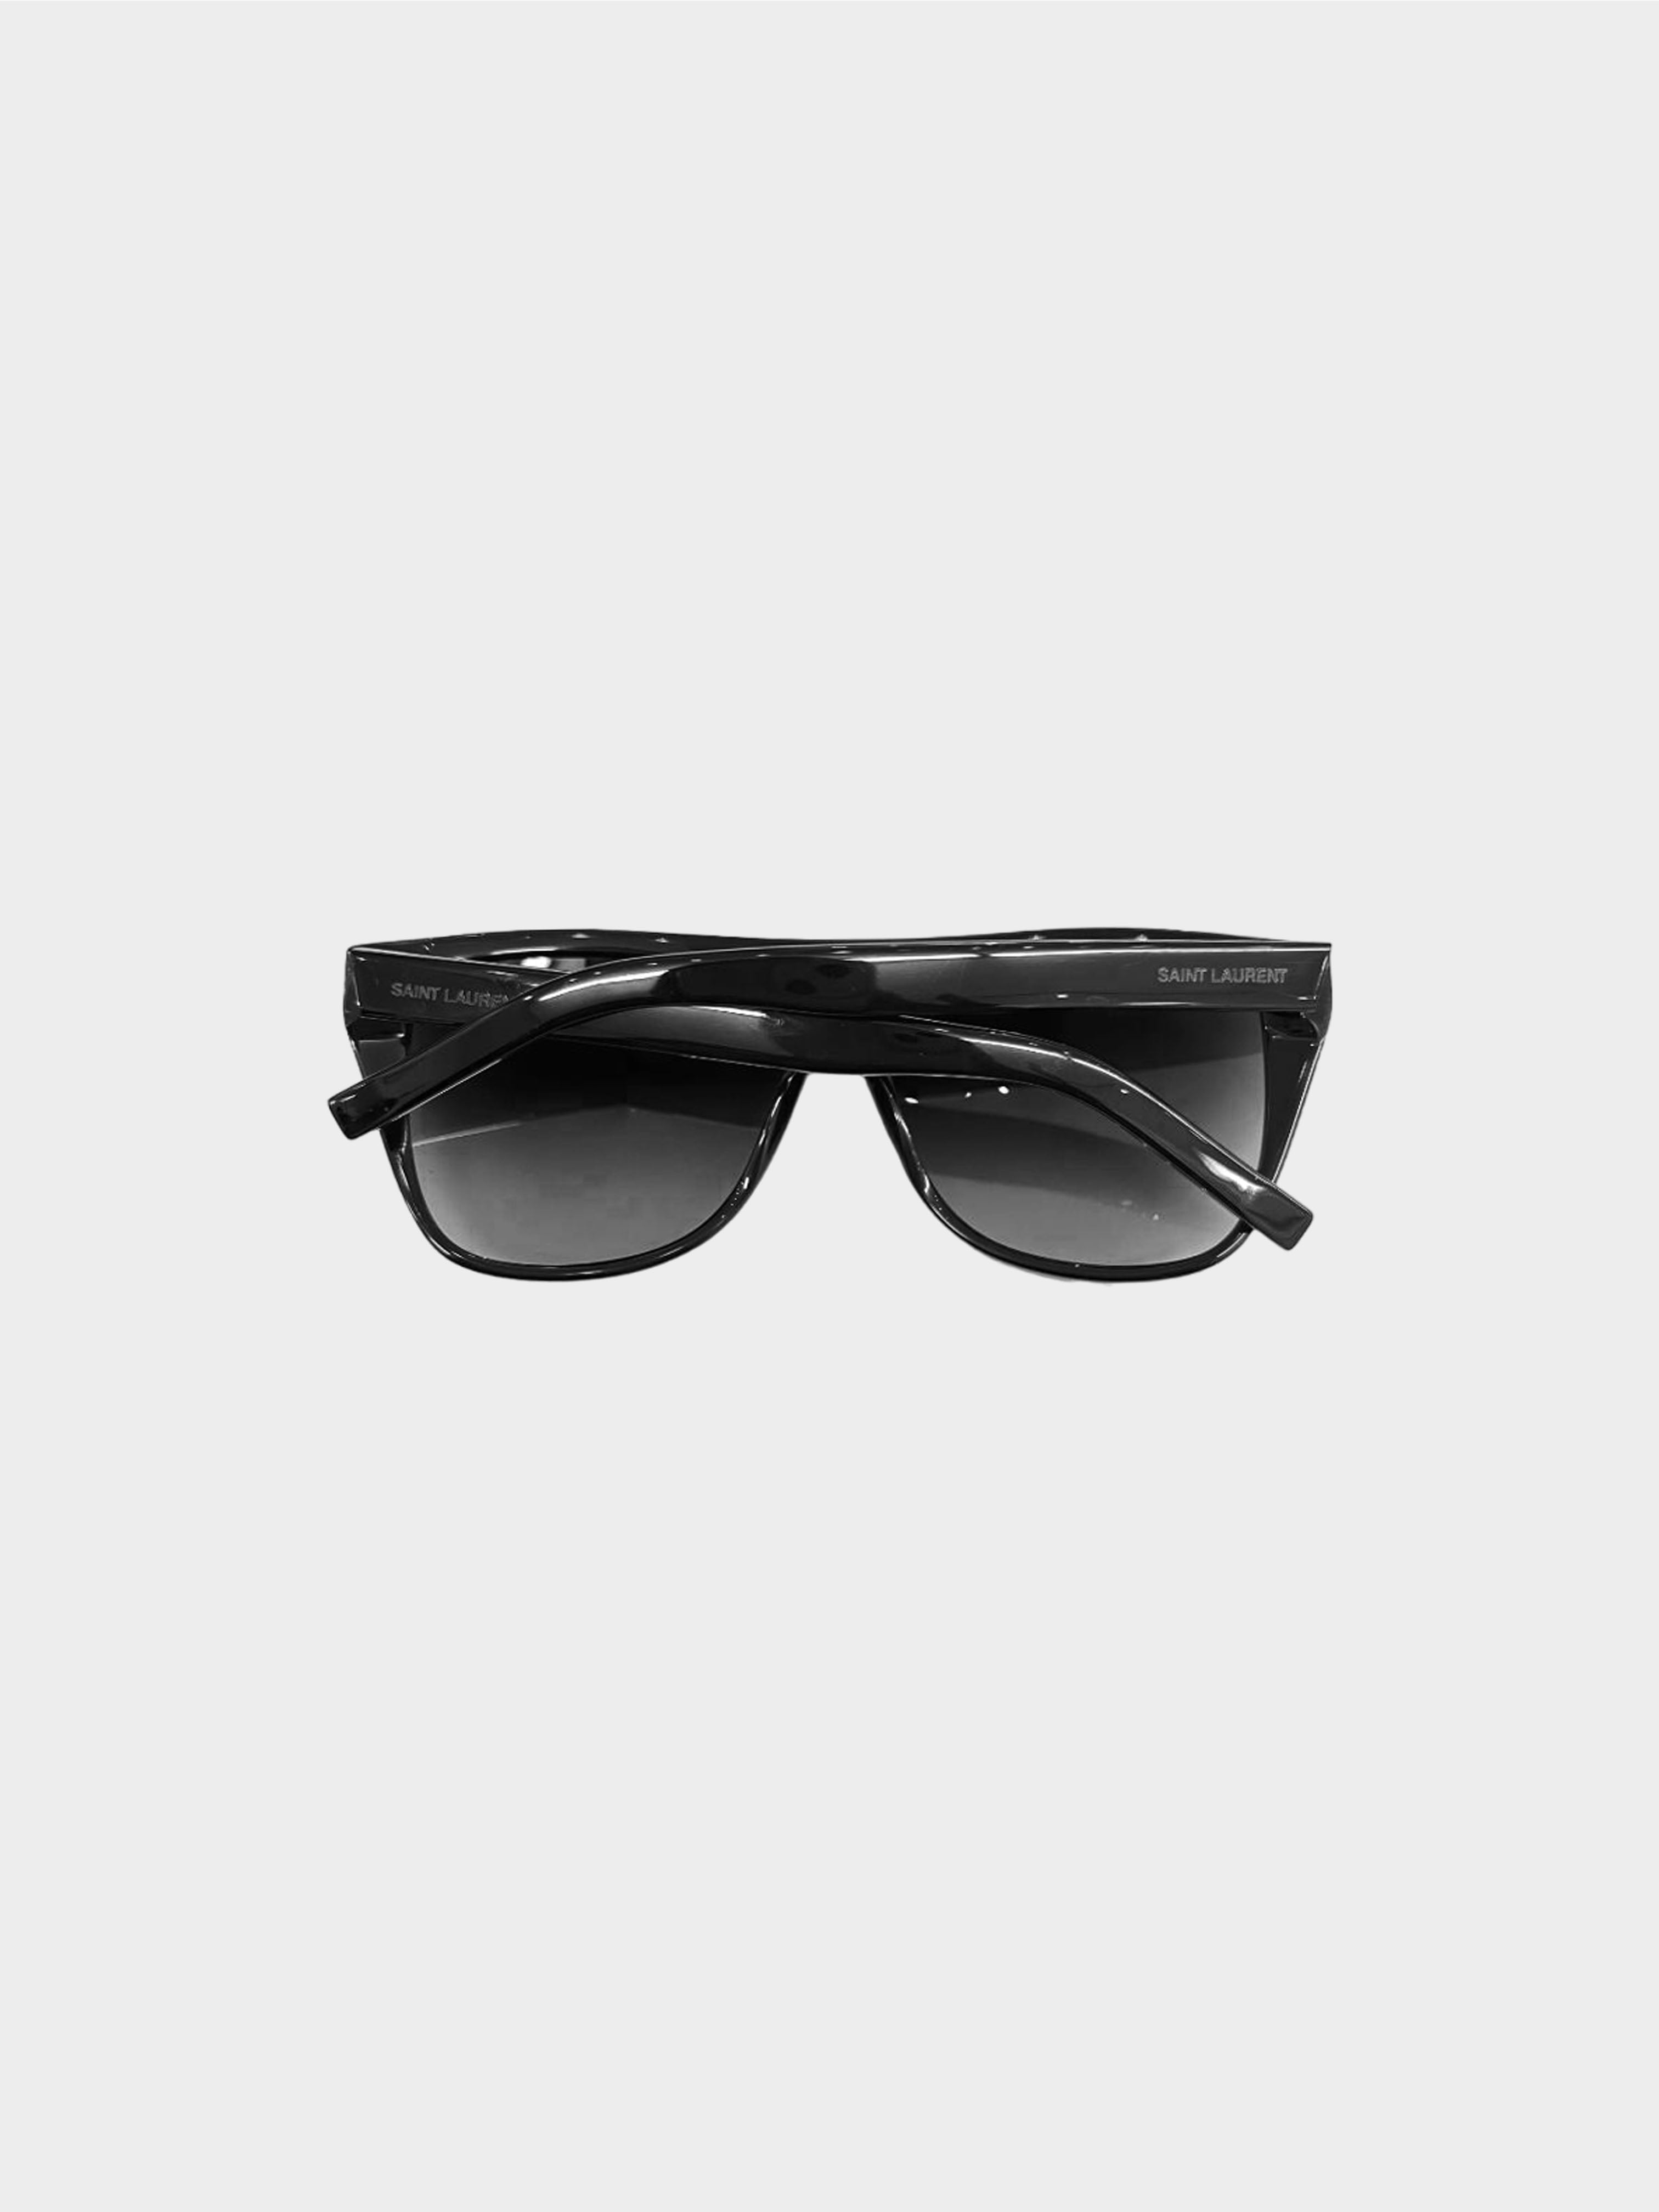 Yves Saint Laurent 2020s Black SL1 Sunglasses